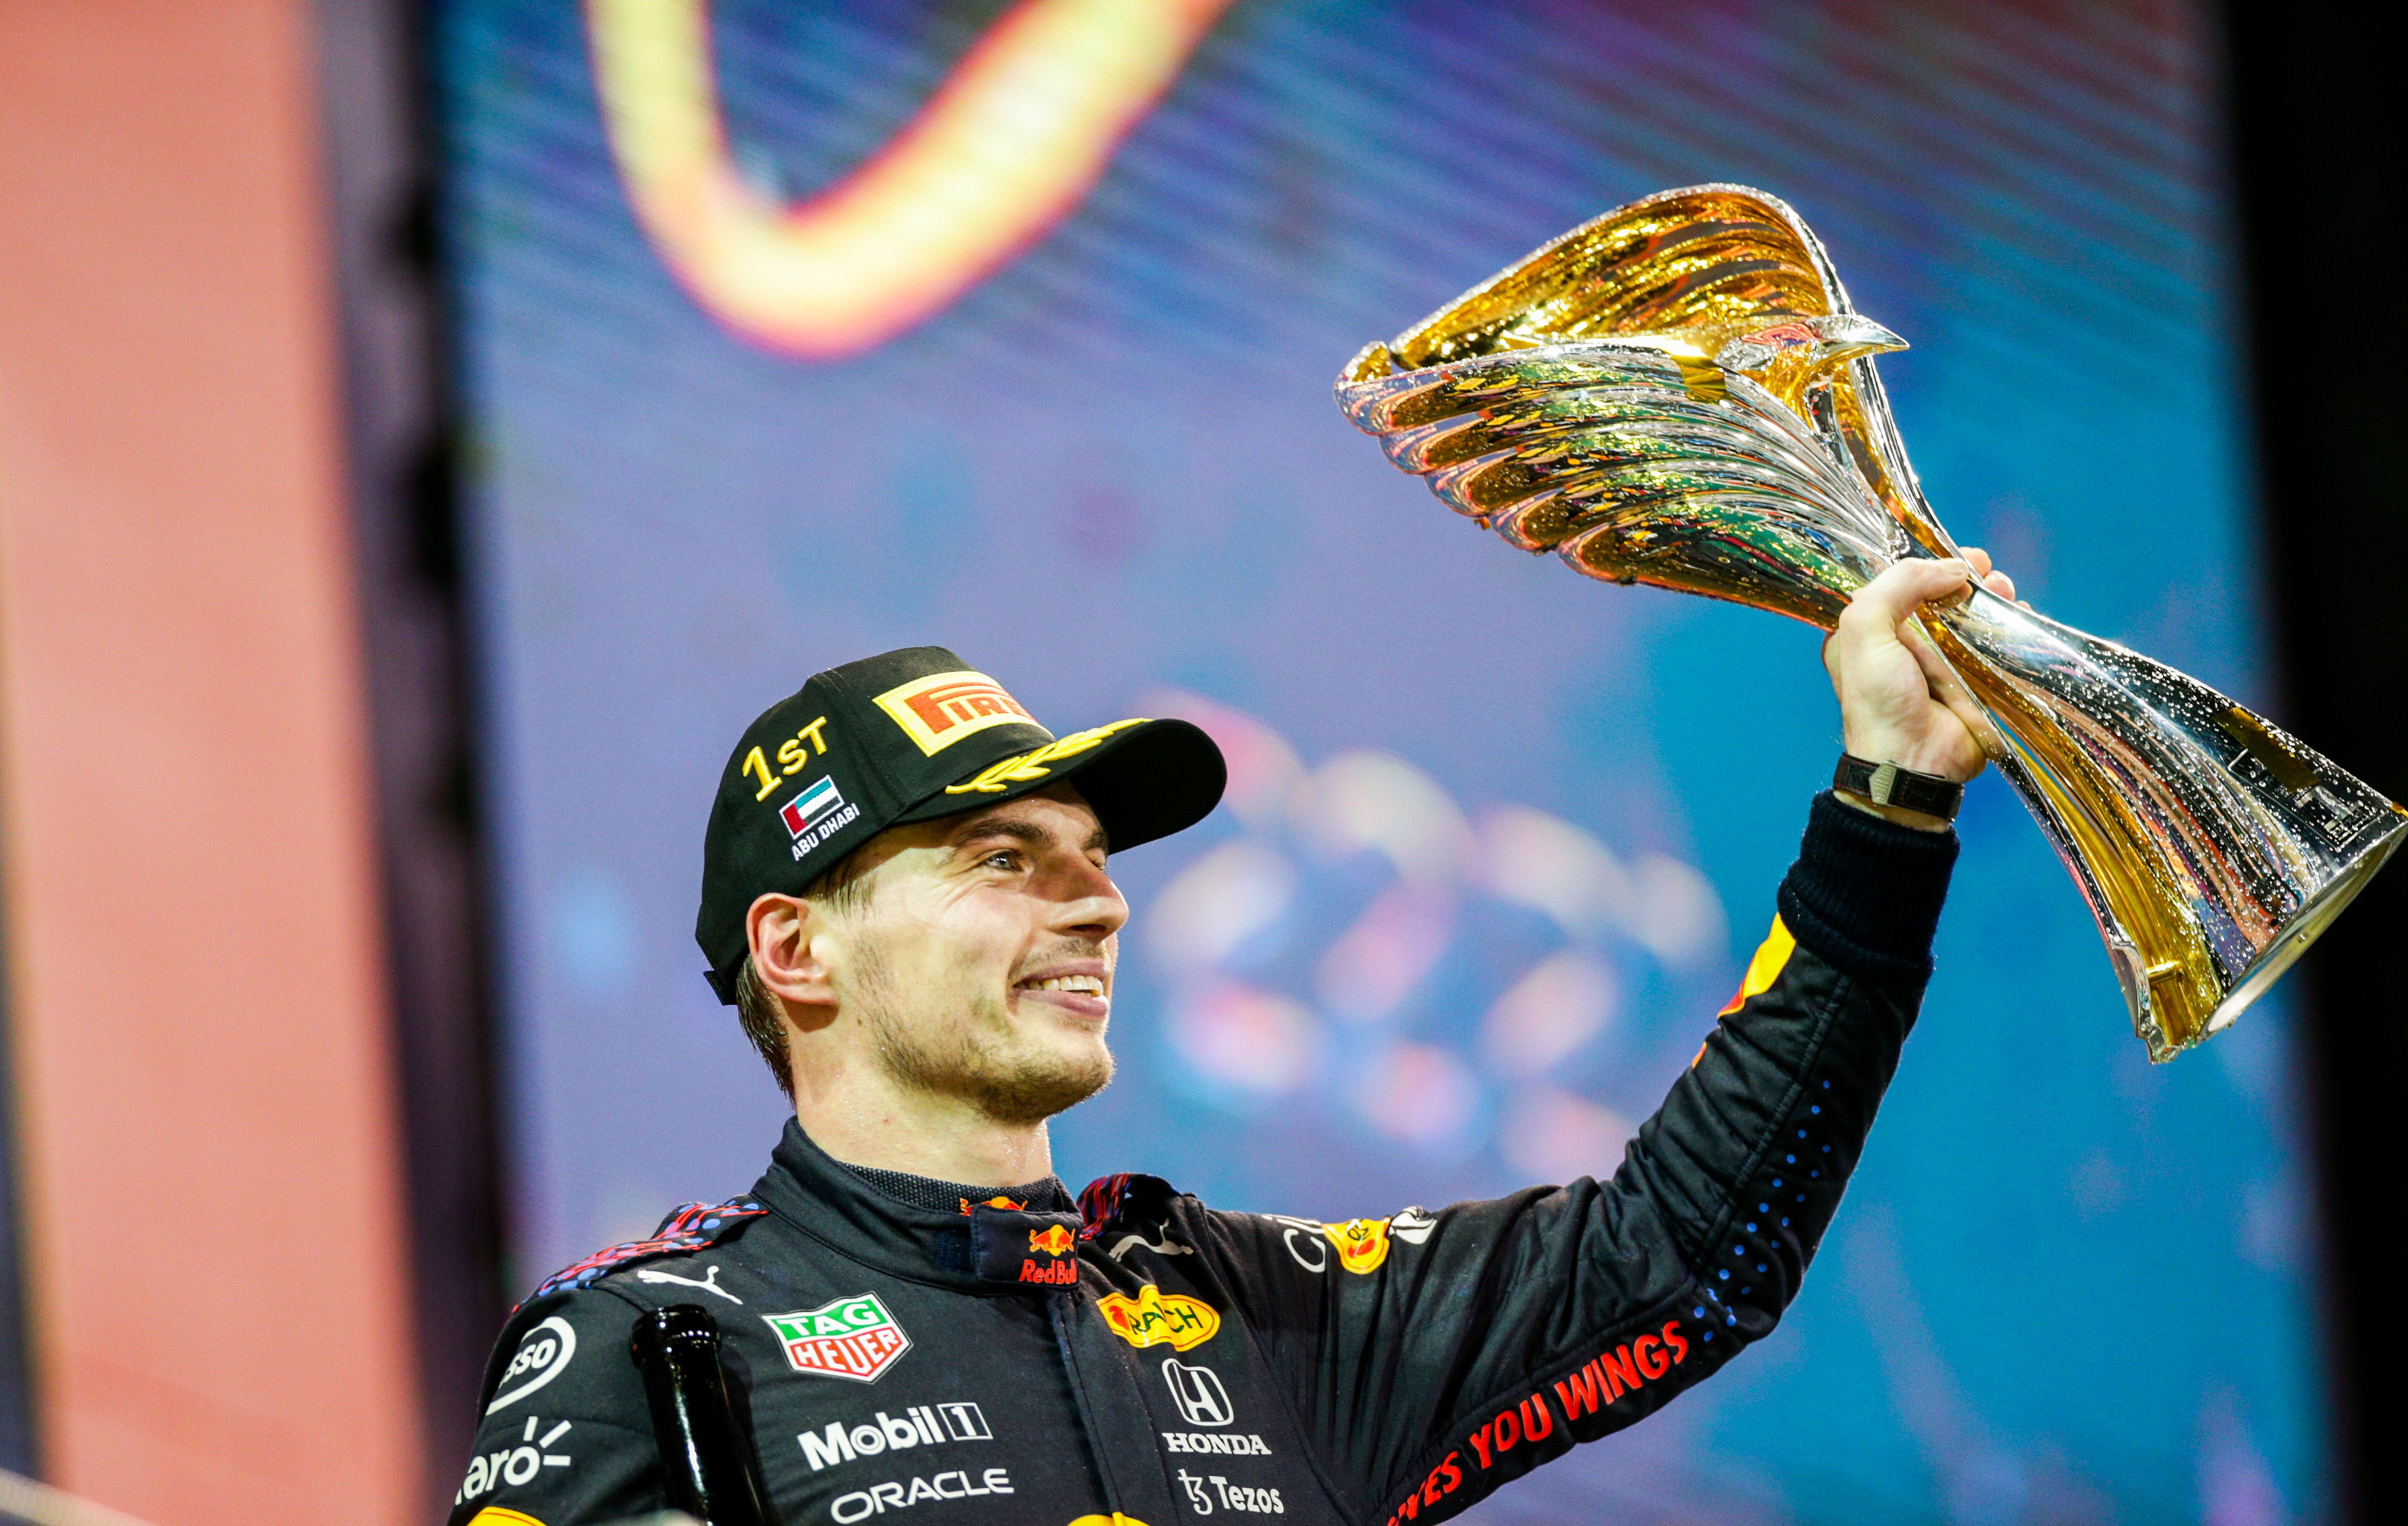 Max Verstappen: 2021 F1 World Champion, Video, Watch TV Show